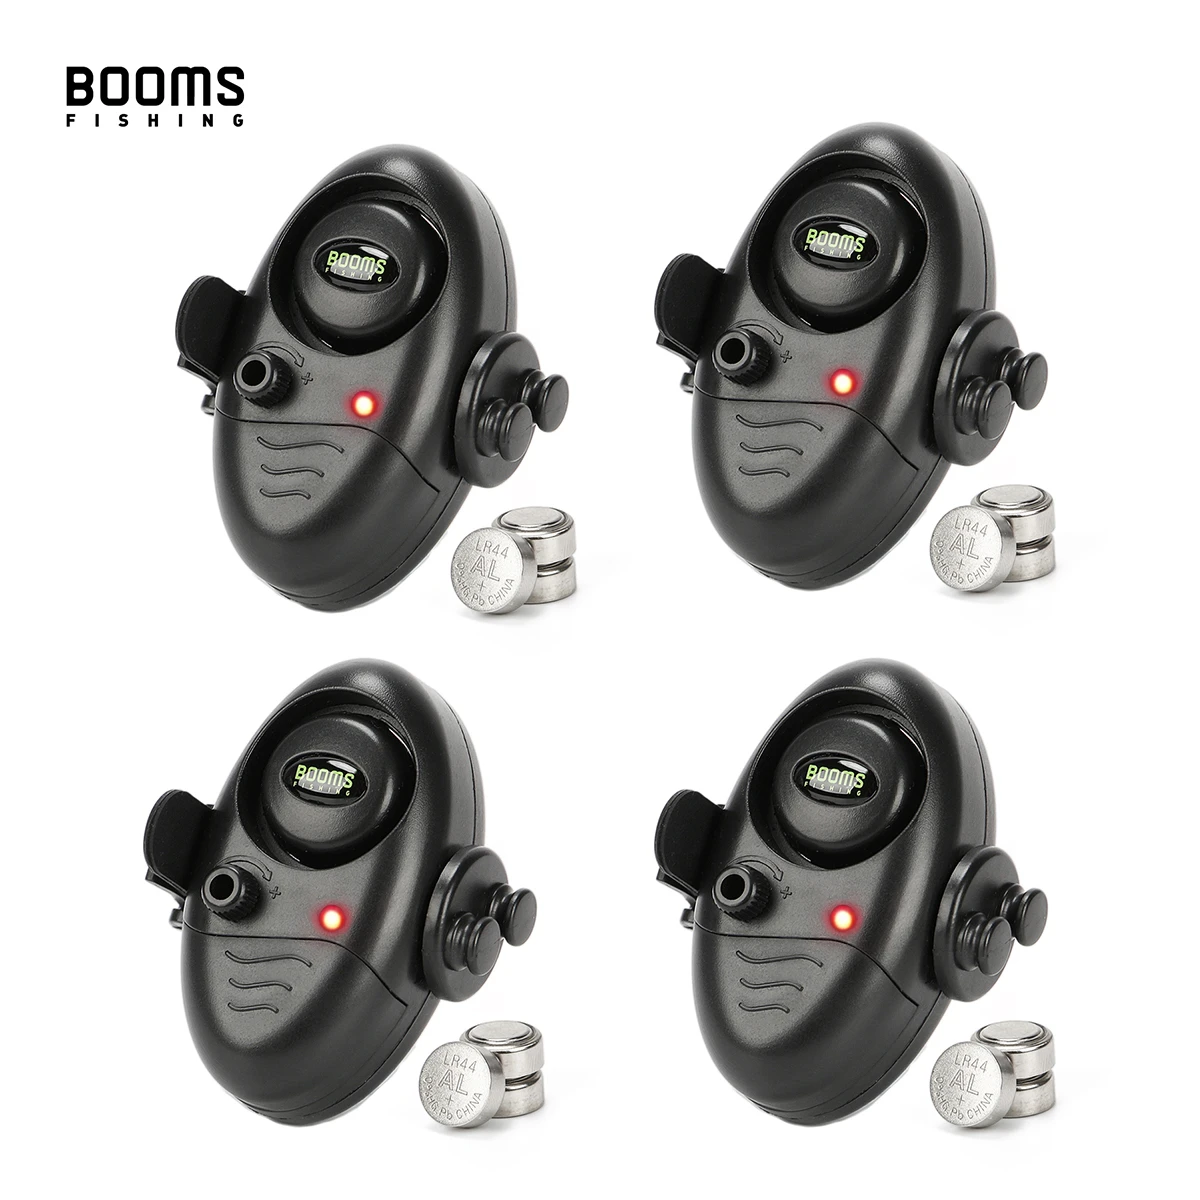 Booms Fishing E02 Bite Alarm Fishing Signalizator Carp Fish Indicator with LED / Sounds Battery Include 4 sets